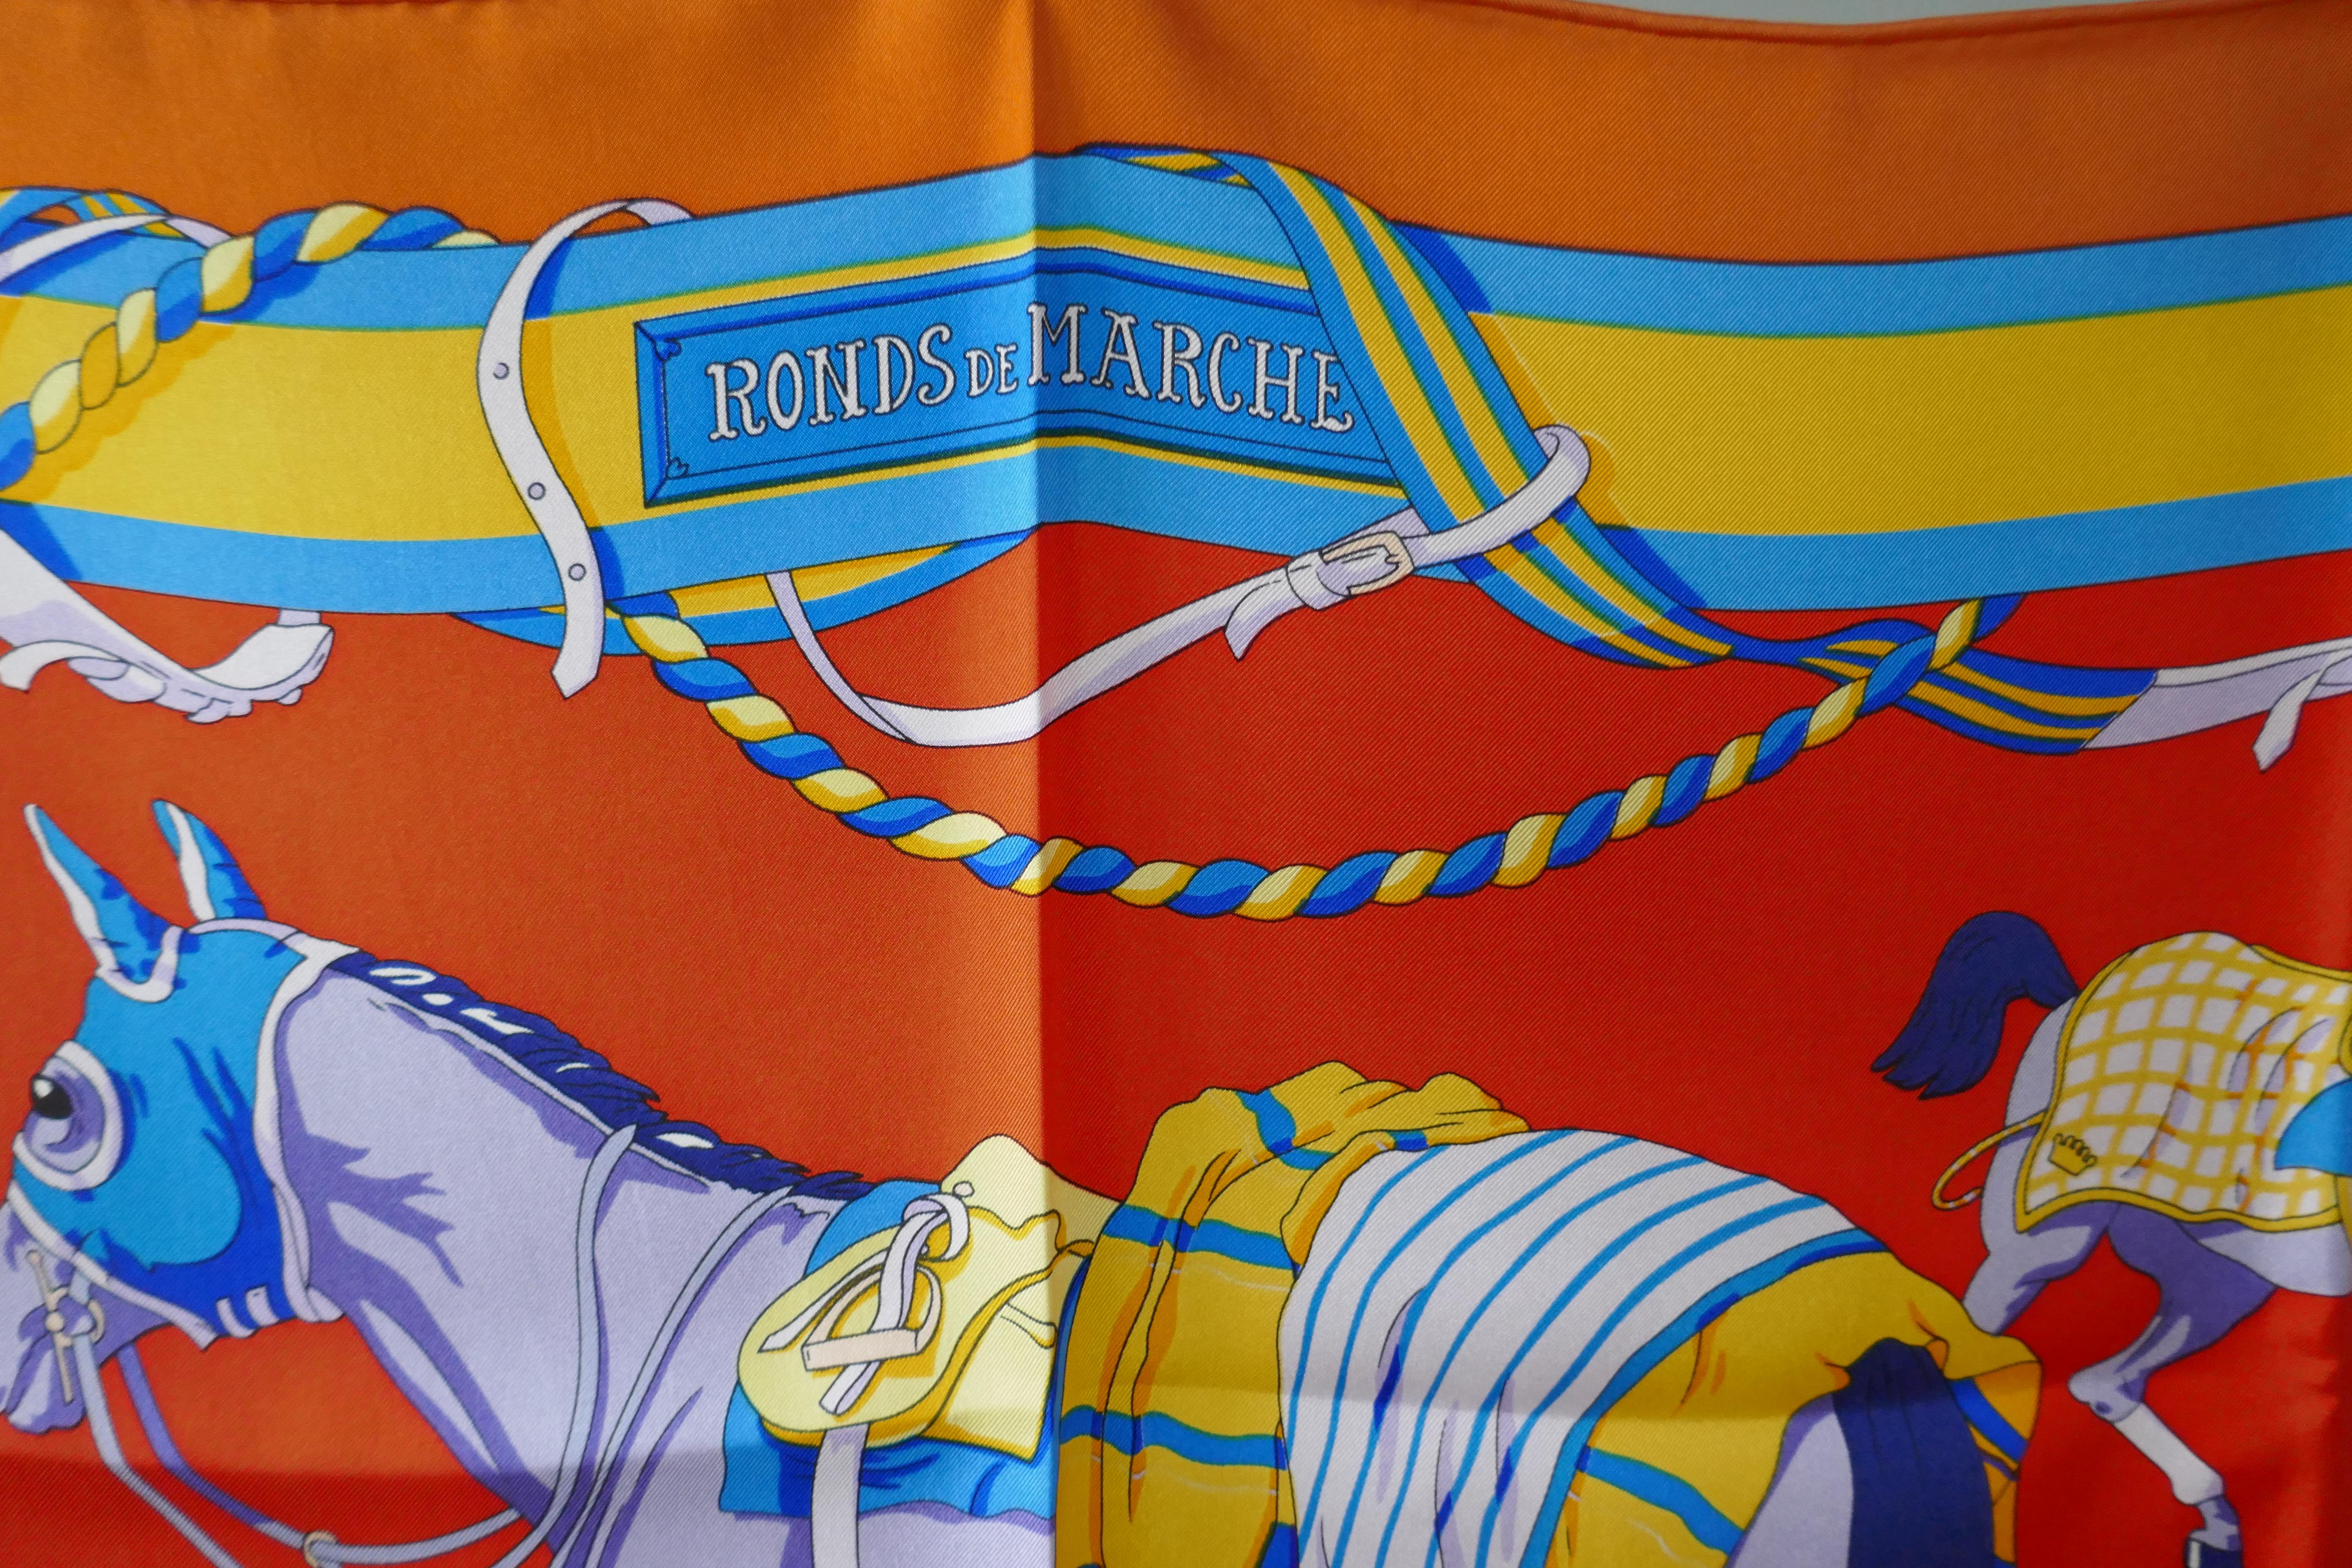 Rare New Hermes 100% Silk Scarf “Ronds de Marche” by Hubert de Watrigant For Sale 2